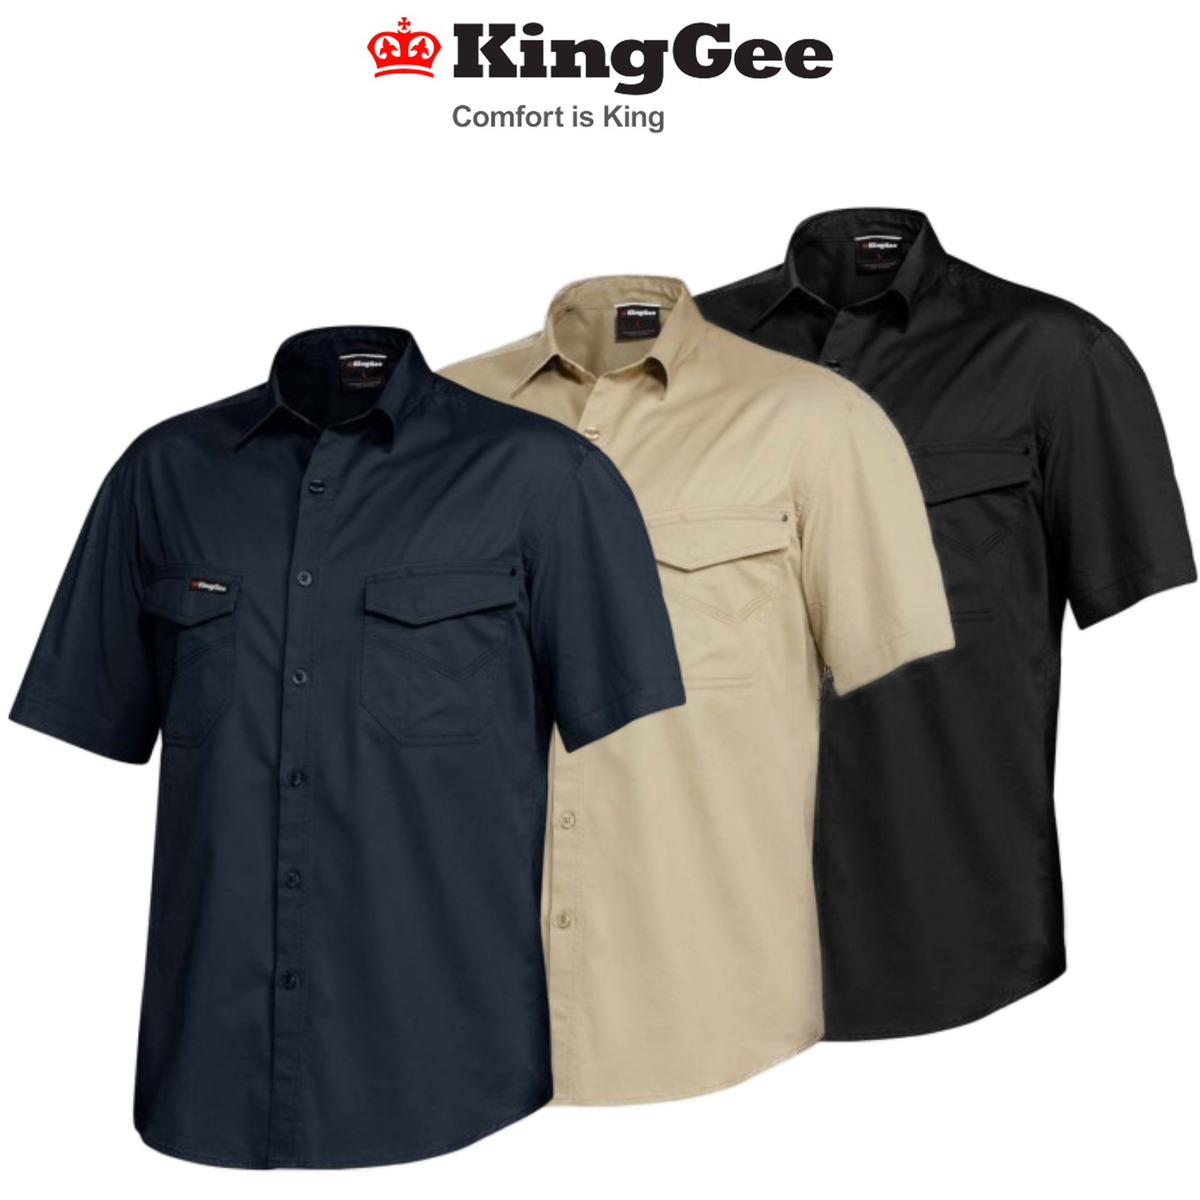 KingGee Mens Tradies Shirt S/S Lightweight Breathable Slim Fit Work K14355